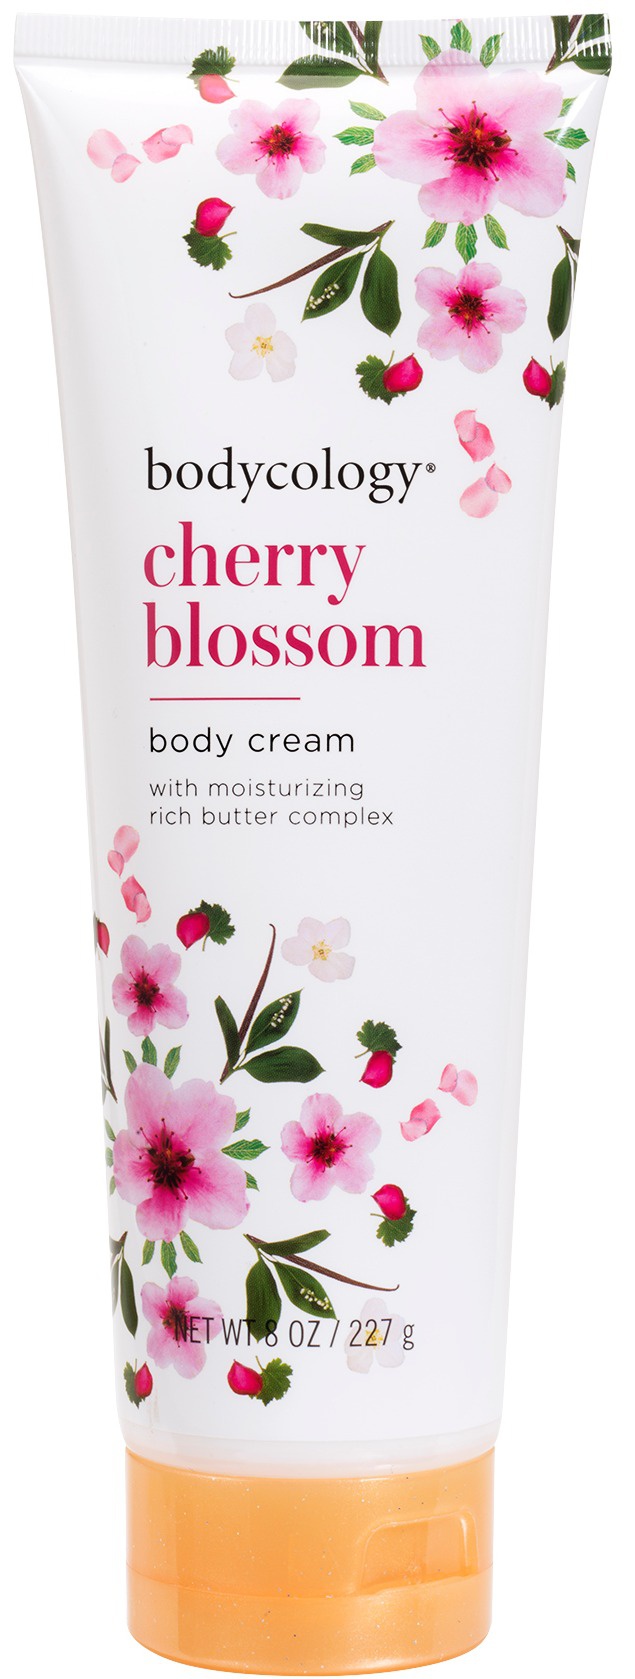 Bodycology Cherry Blossom Body Cream